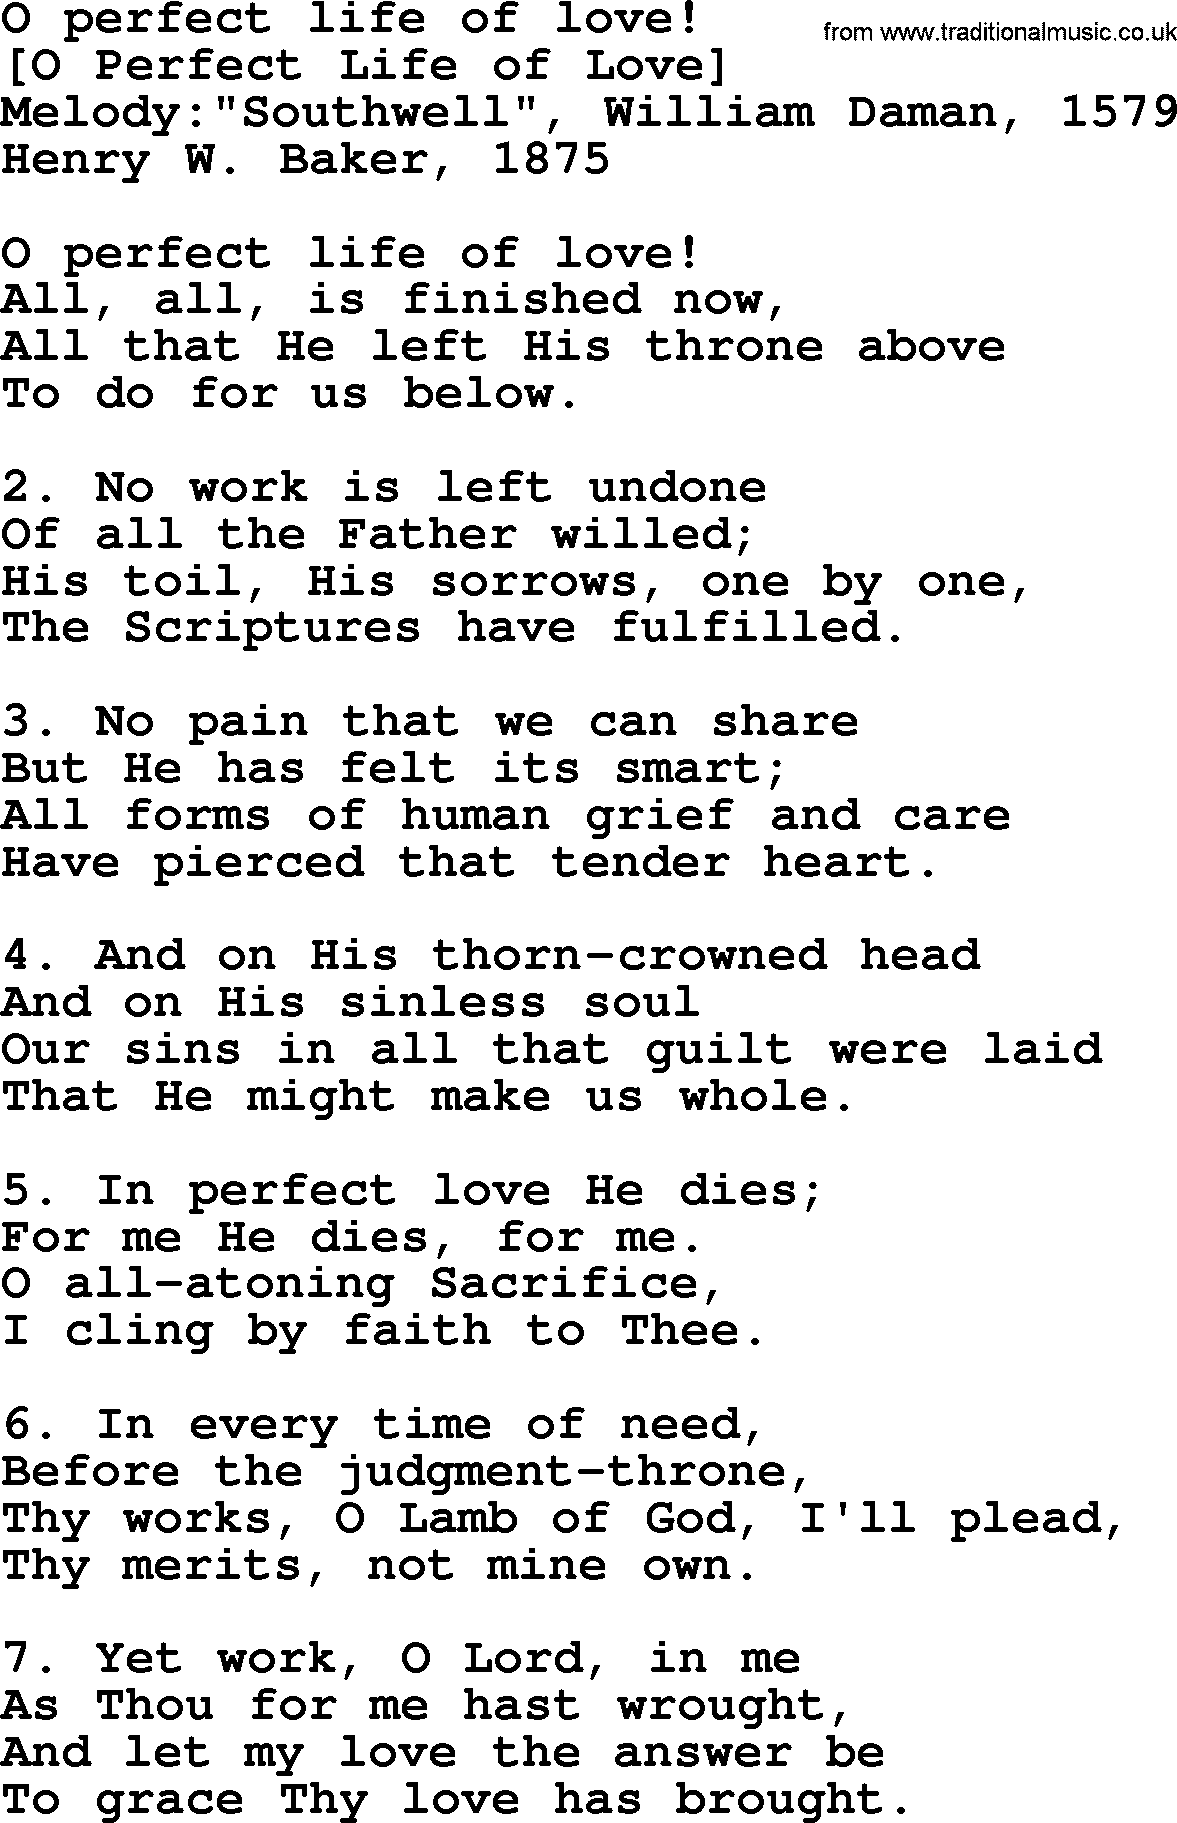 Old English Song: O Perfect Life Of Love! lyrics